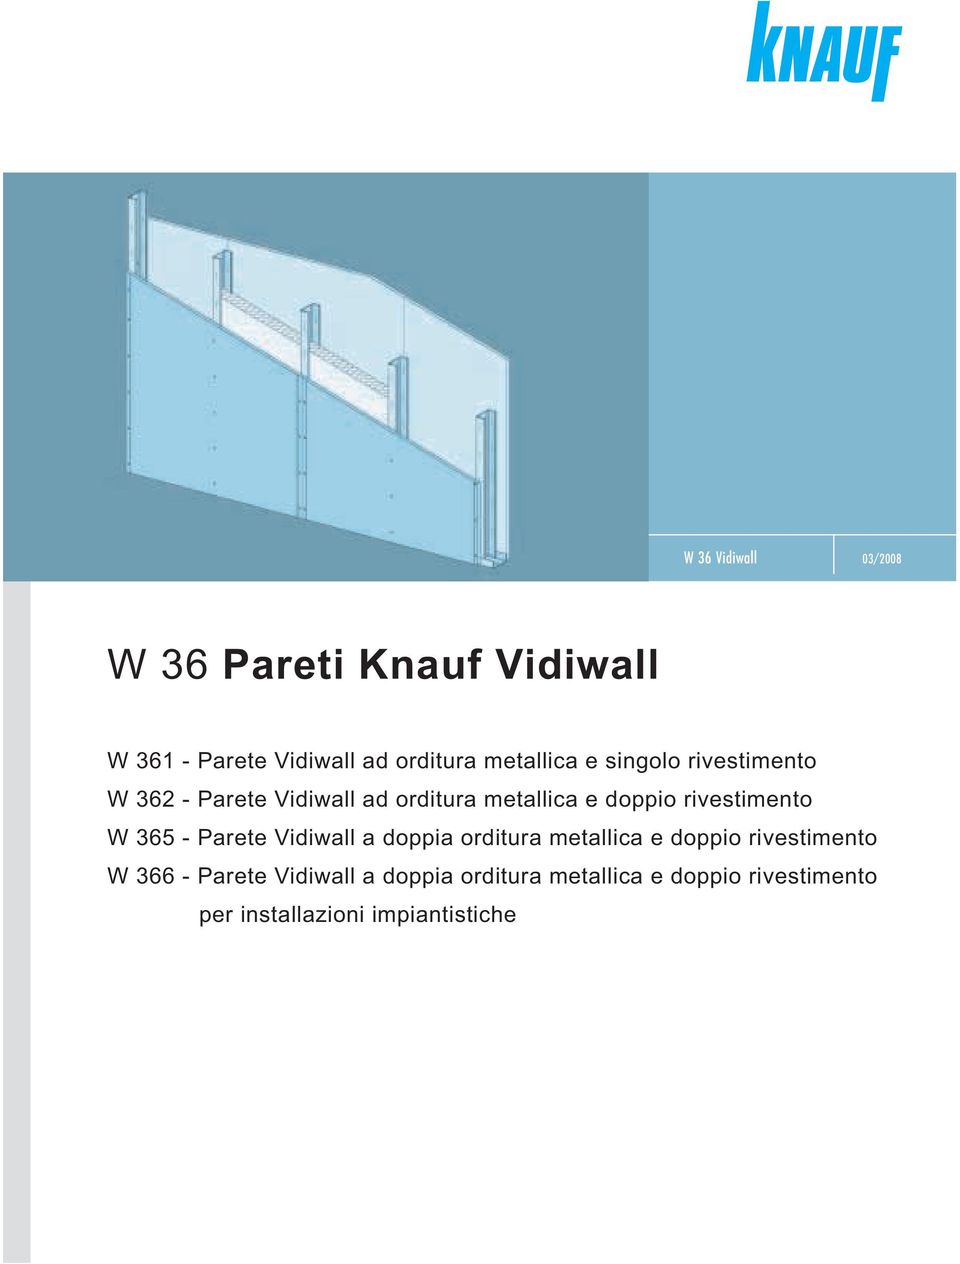 rivestimento W 365 - Parete Vidiwall a doppia orditura metallica e doppio rivestimento W